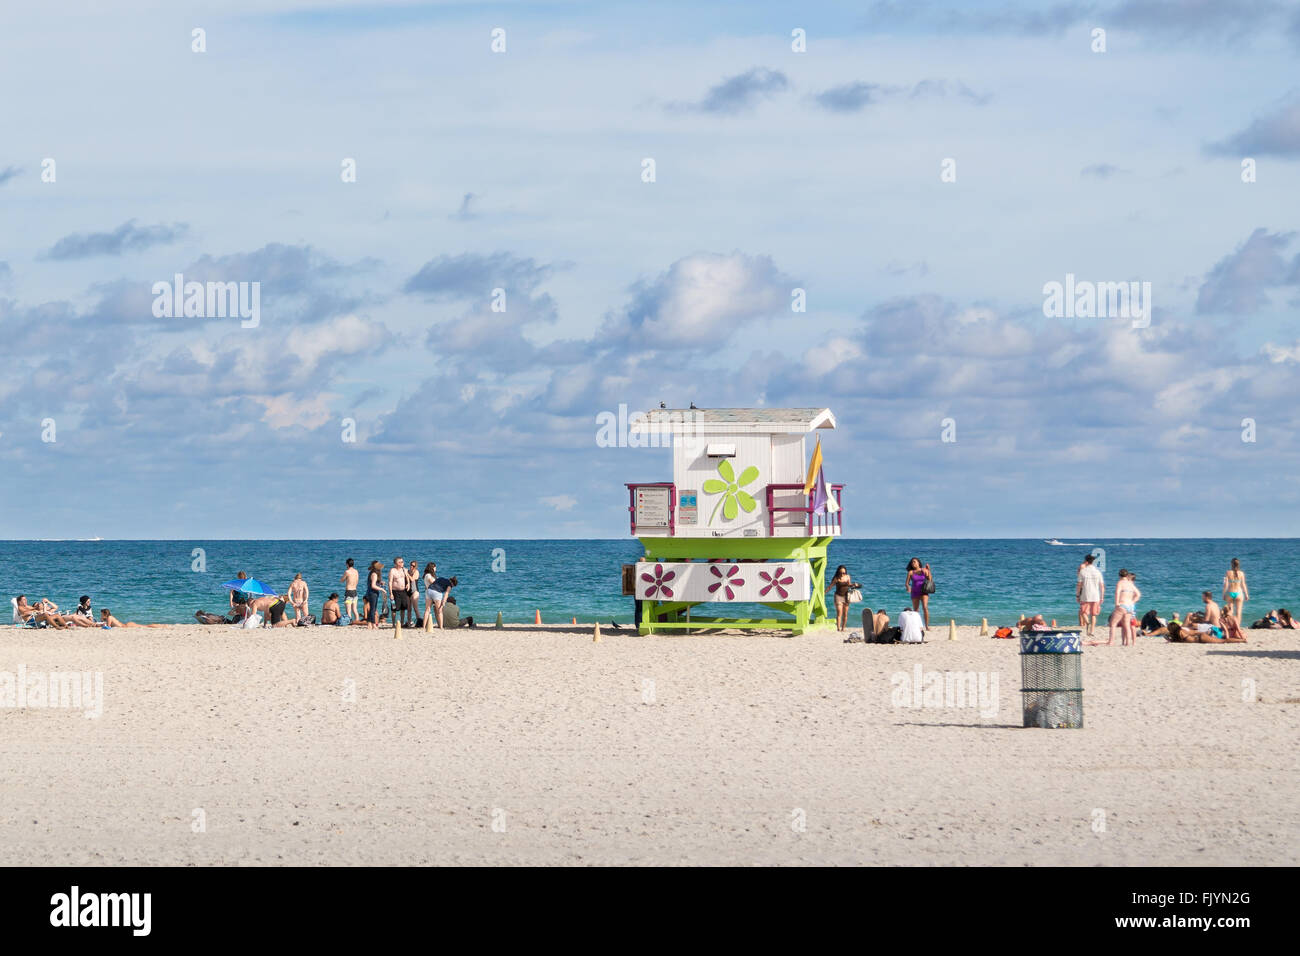 Station de garde la vie de South Beach de Miami Beach, Floride, USA Banque D'Images